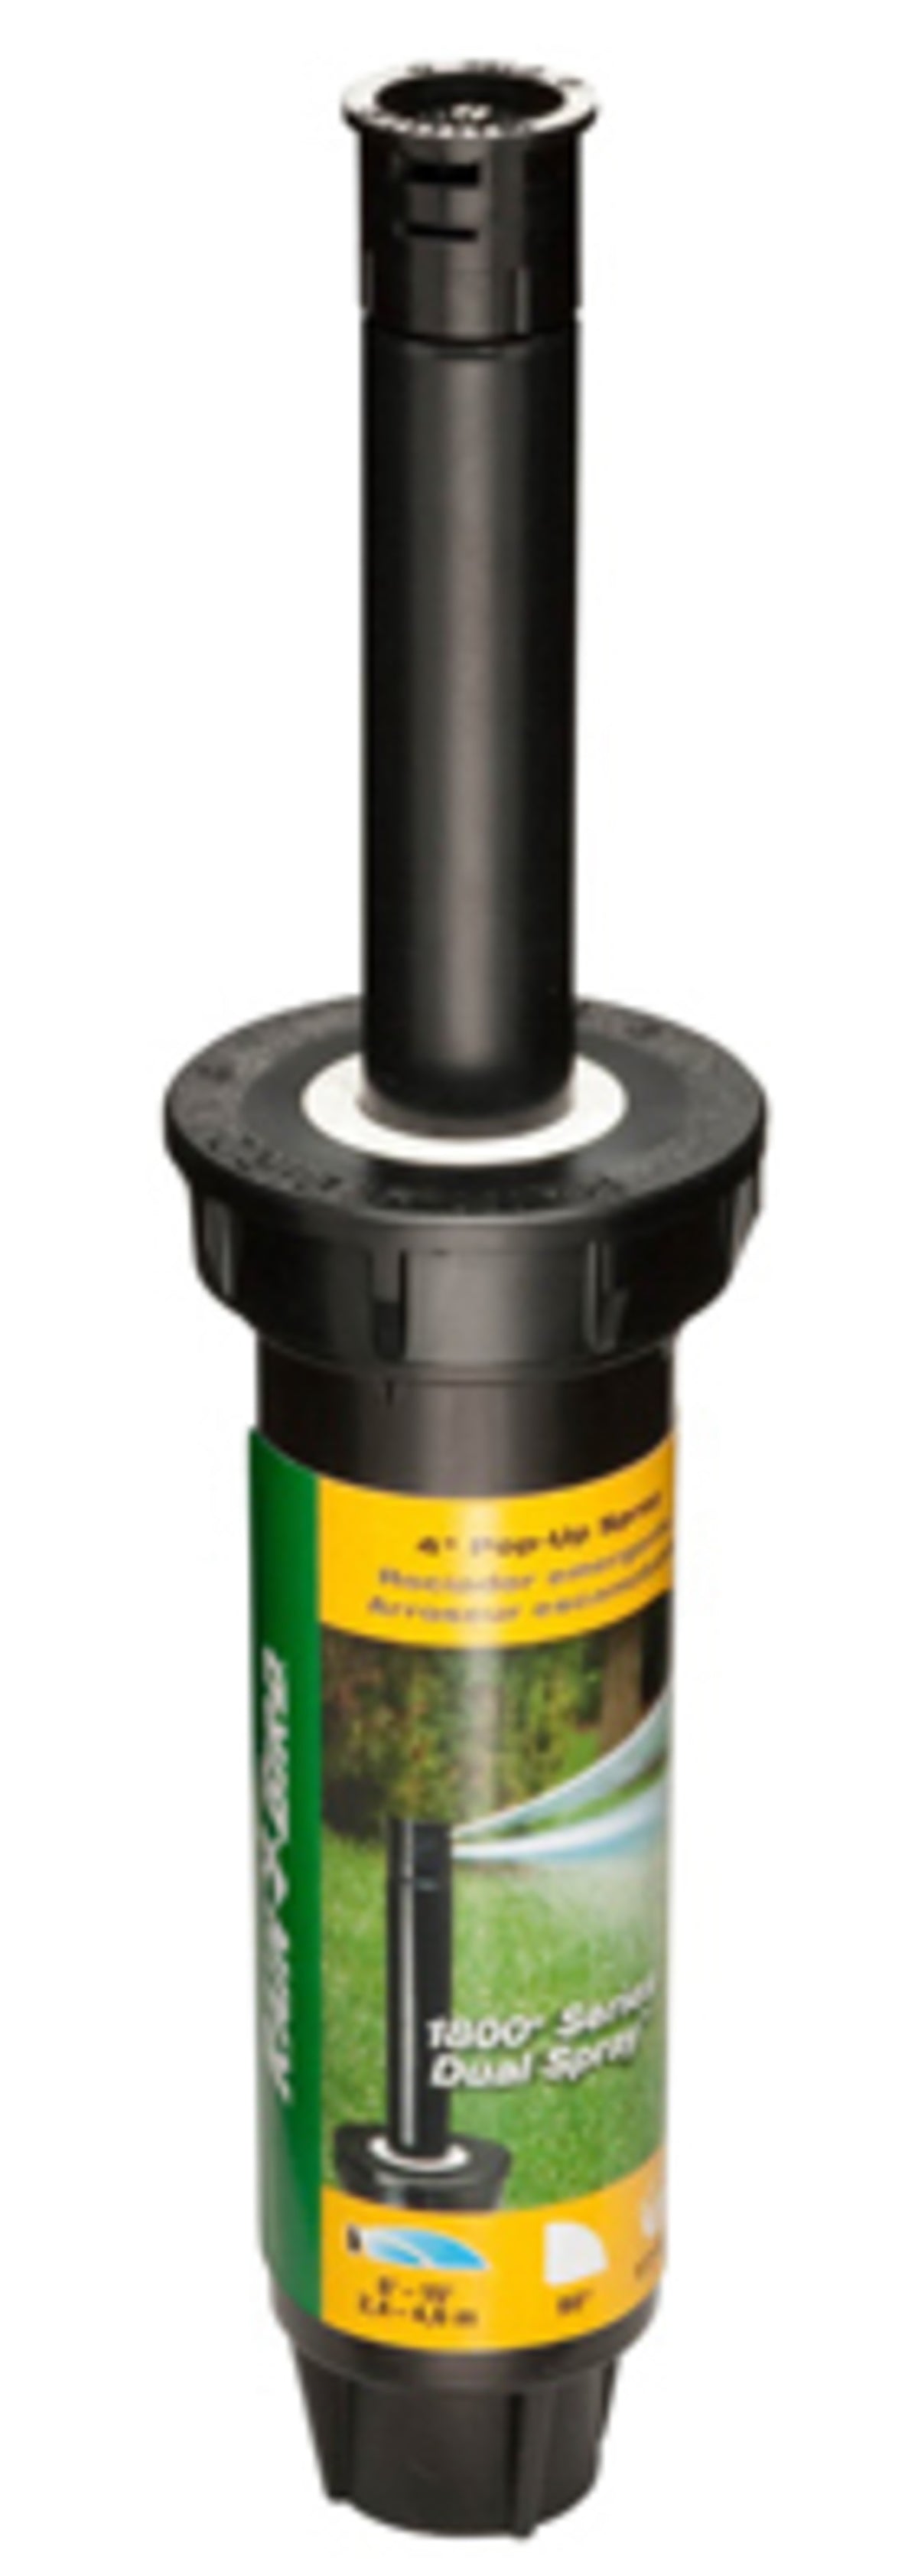 Rain Bird 1804QDSP25 1800 Professional Series Pressure Regulating Pop-Up Sprinkler